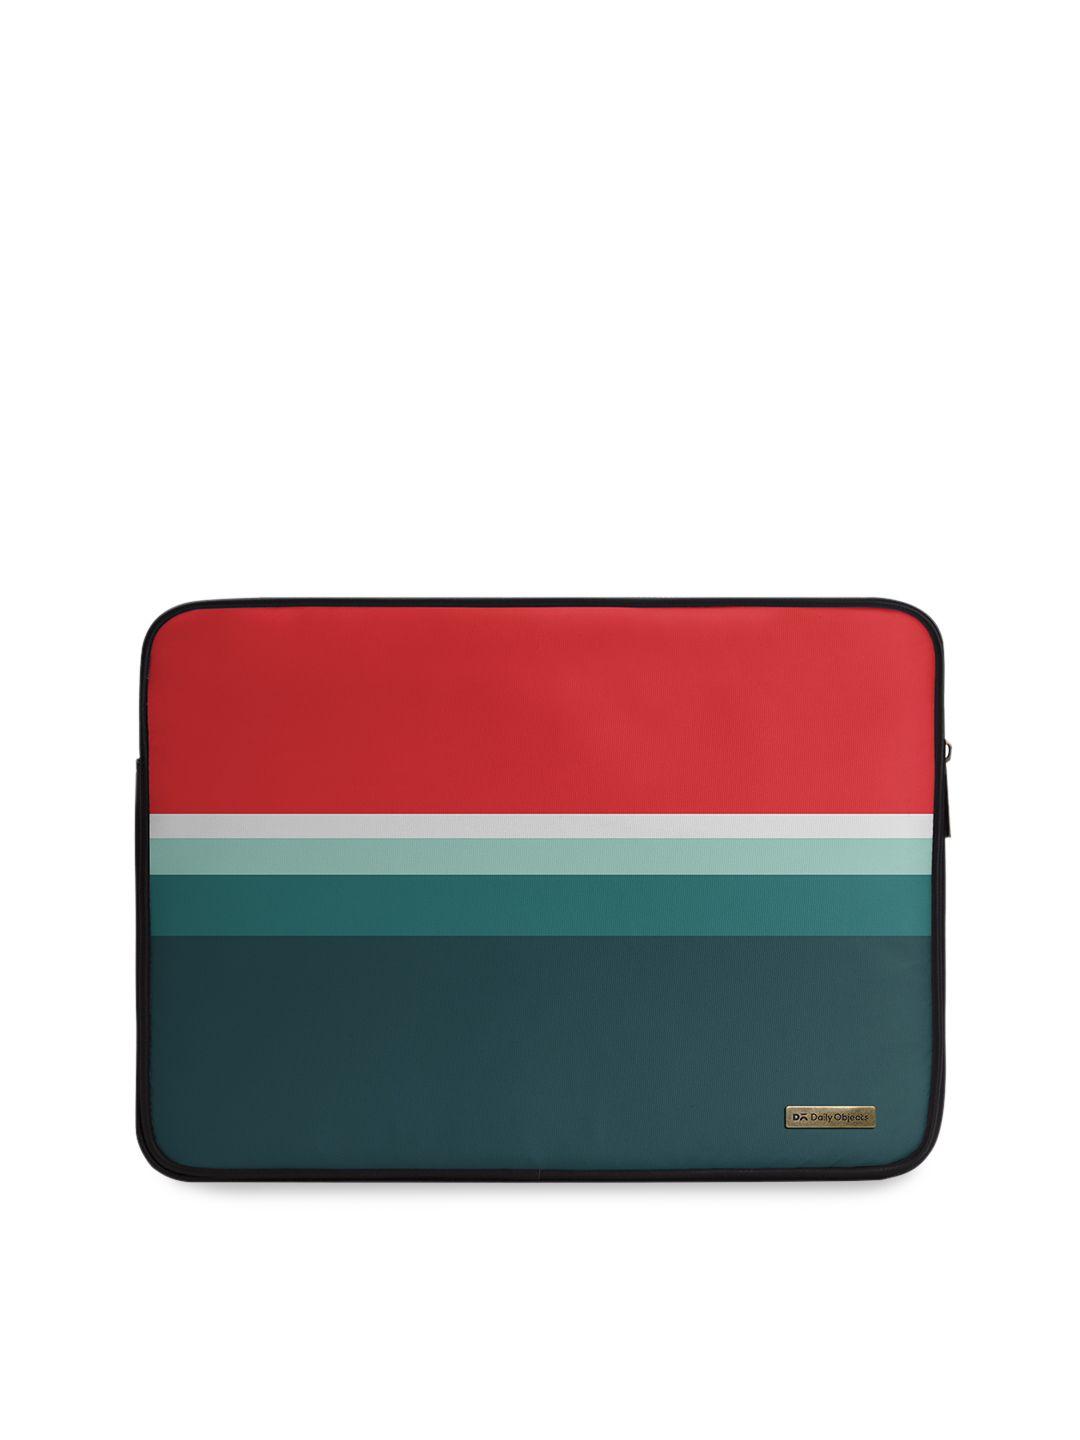 dailyobjects unisex red & navy blue colourblocked laptop sleeve